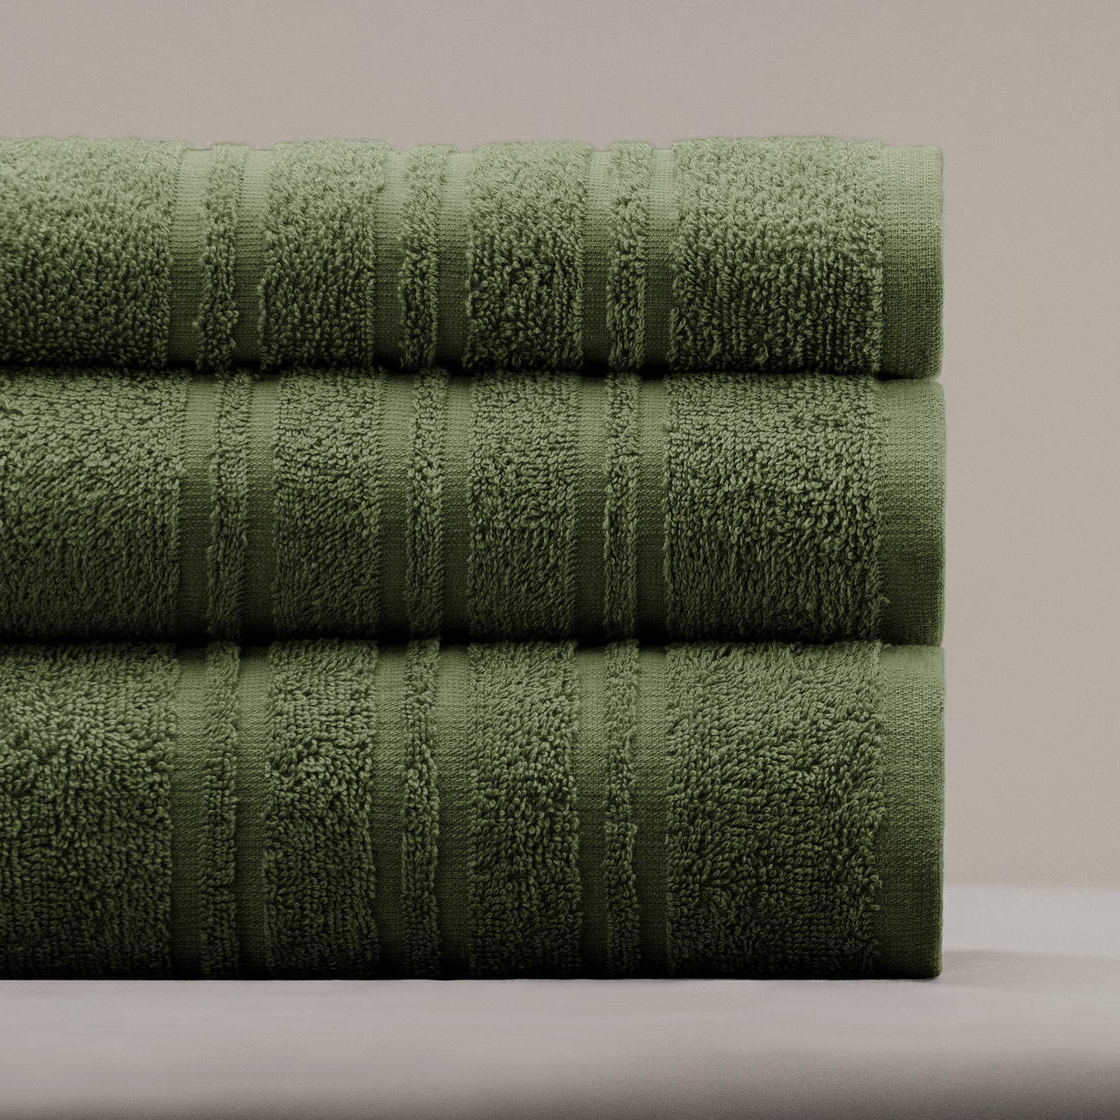 Махровое полотенце Sofi De Marko Monica зелёное 70х140 см полотенце sofi de marko diva 140x70 см s 132крем